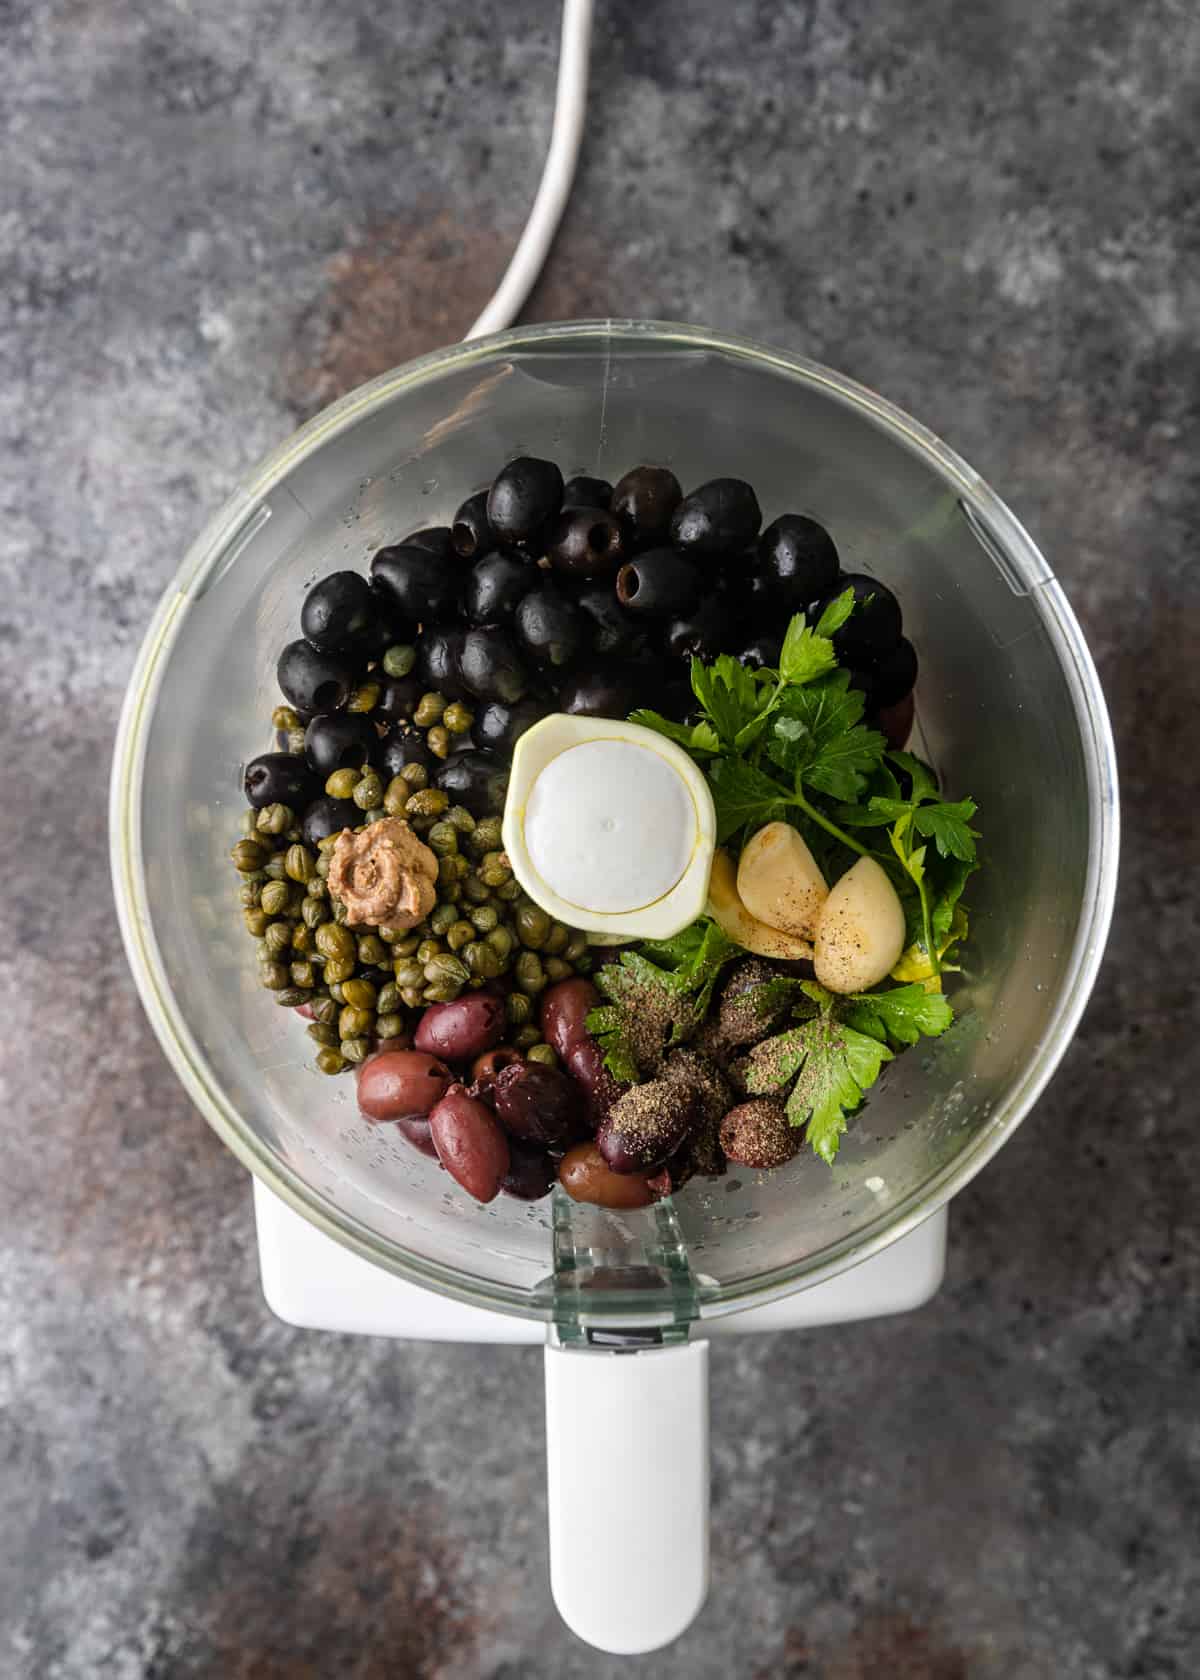 blending herbs and olives